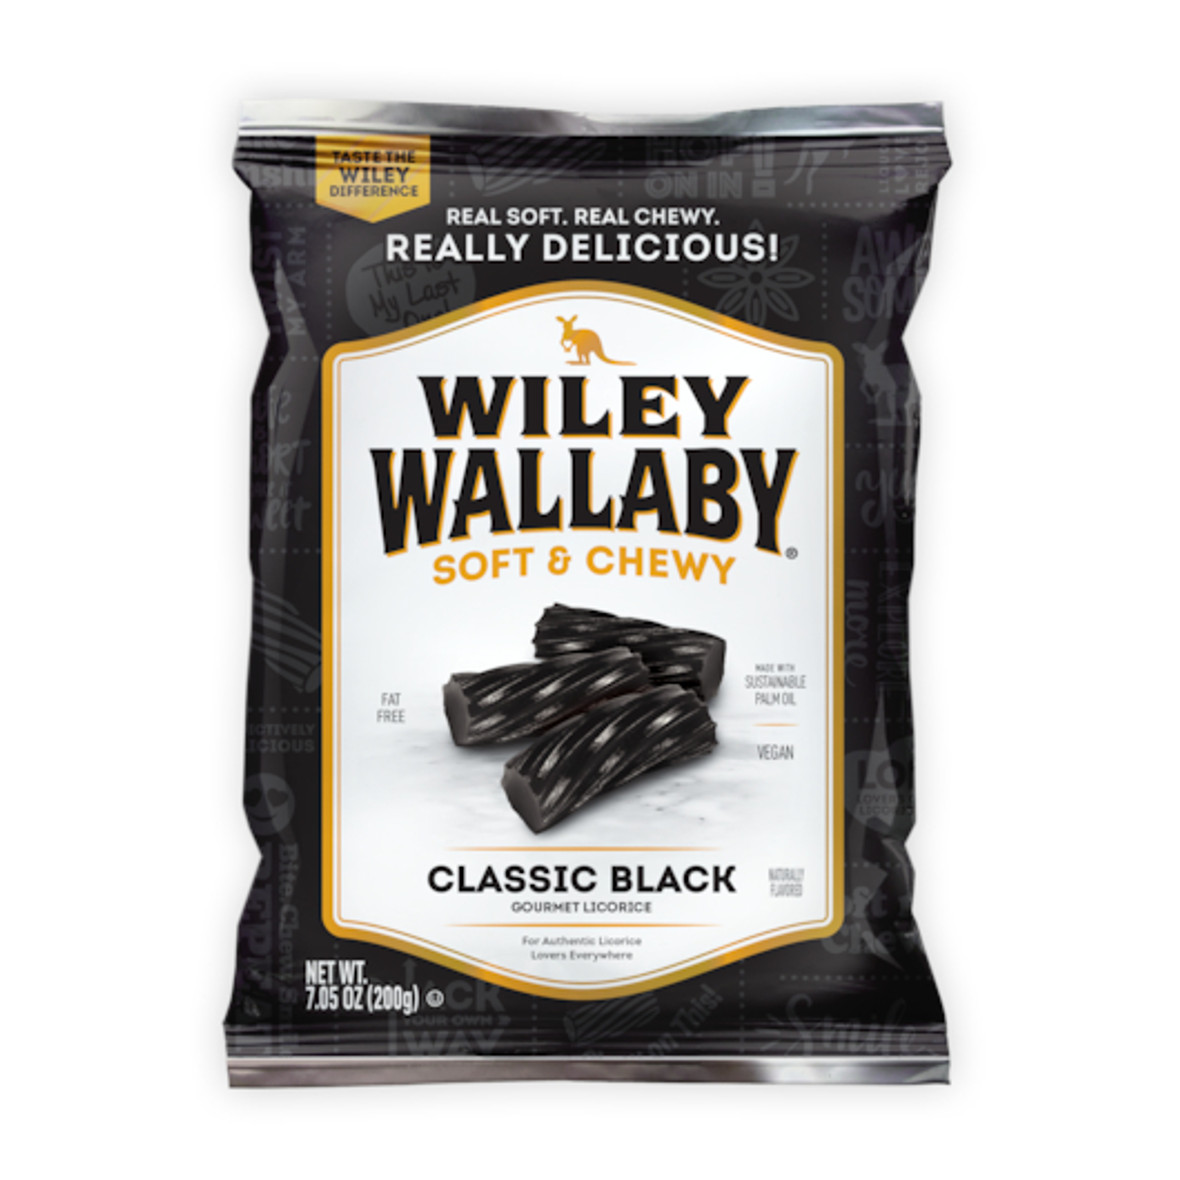 Wiley Wallaby Aussie Black Liquorice Bag, 7.05 Ounce, 12 Per Case